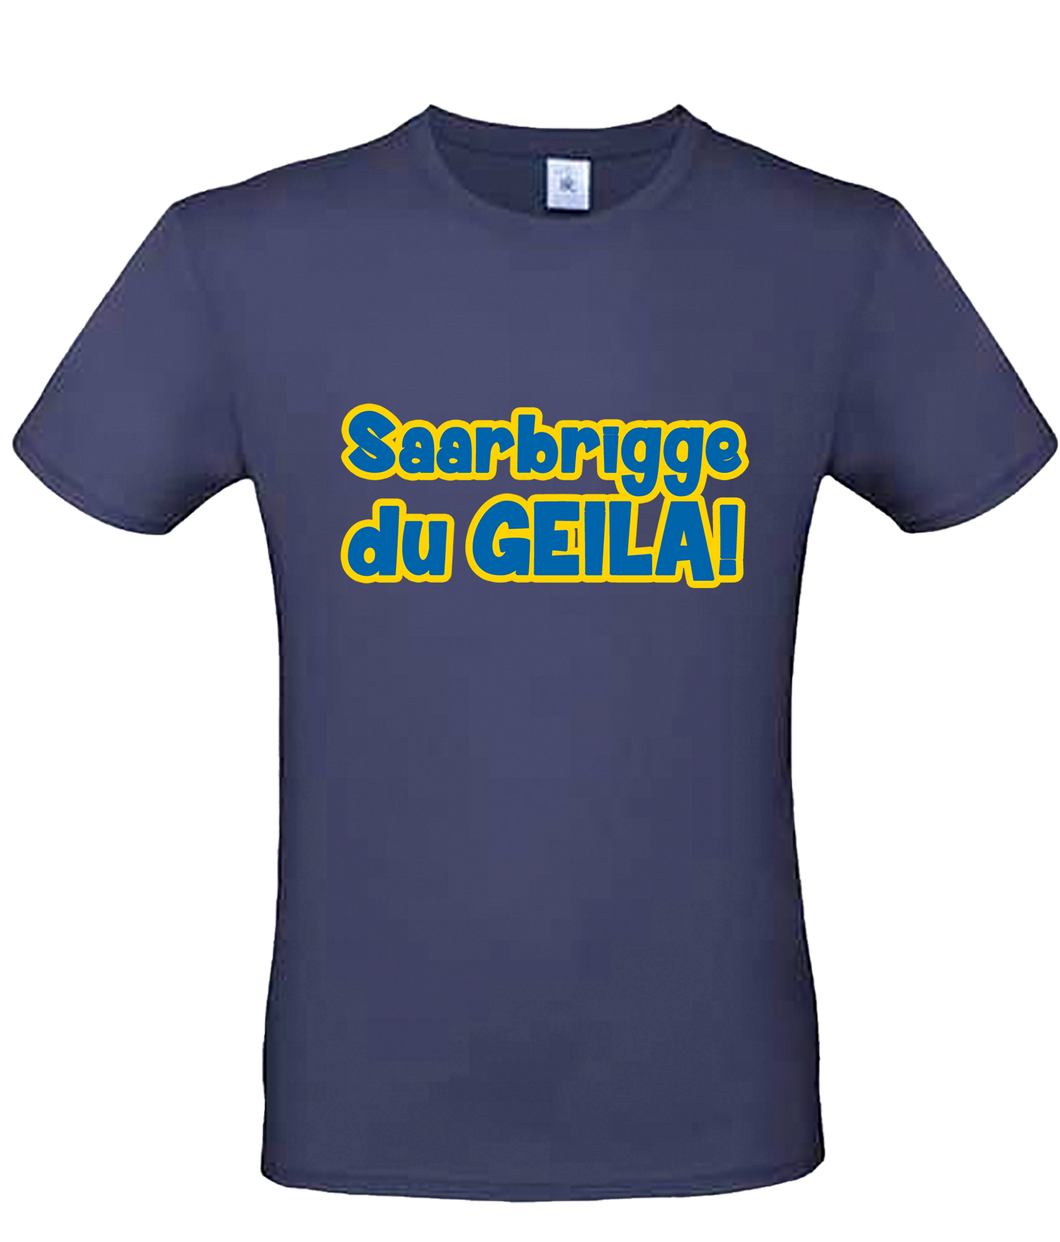 T-Shirt - Saarbrigge du Geila!